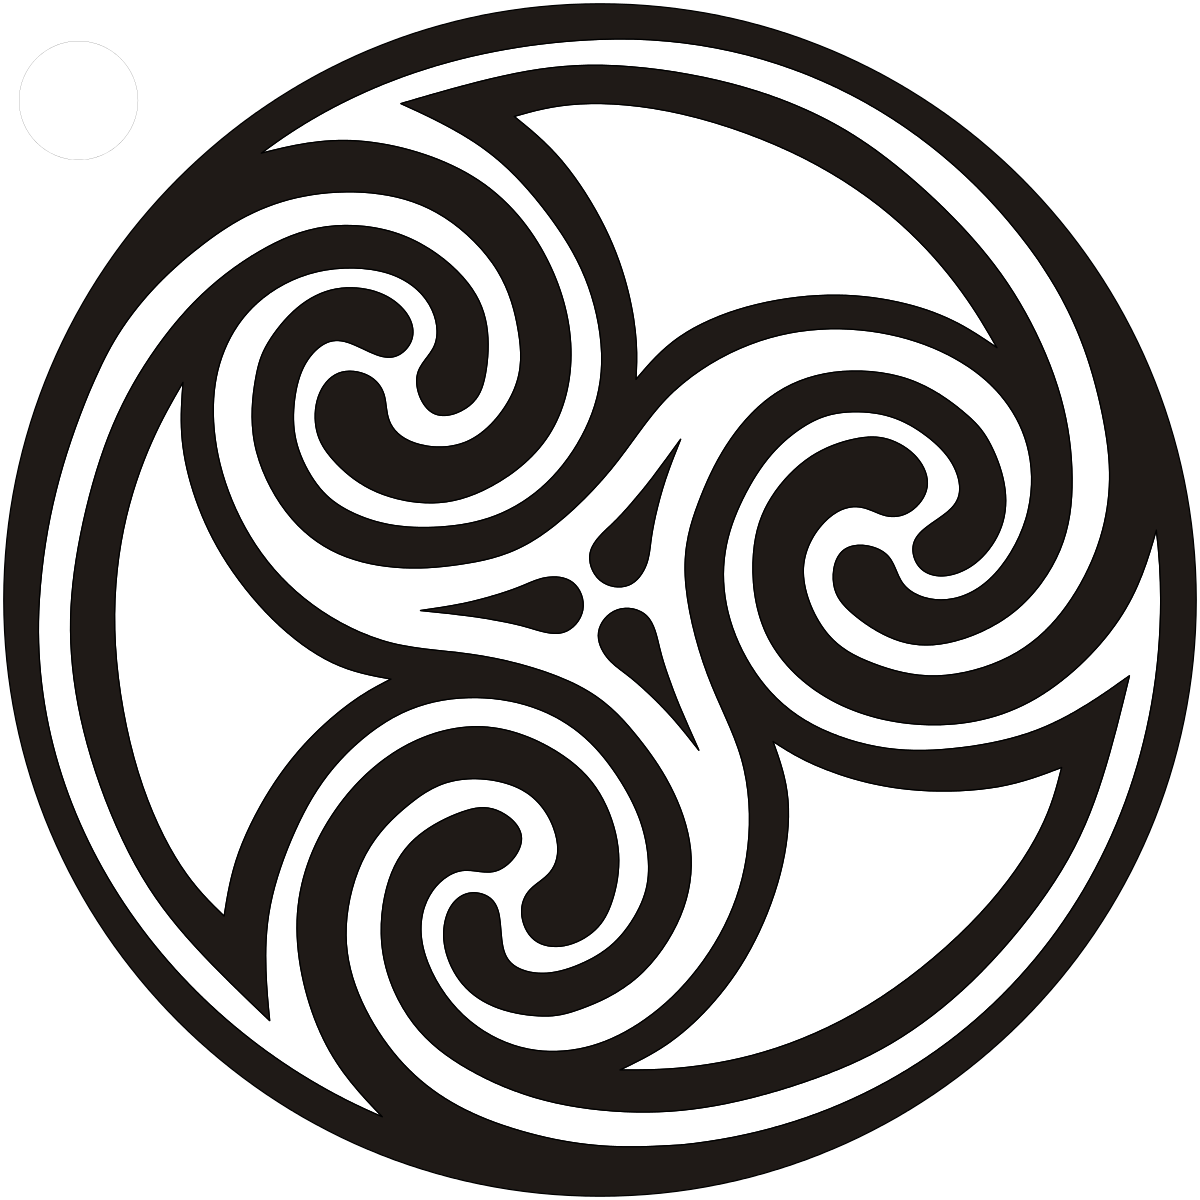 Символы png. Трискелион кельты. Кельтский трискель. Трискель Скандинавия. Кельтский символ трискель.